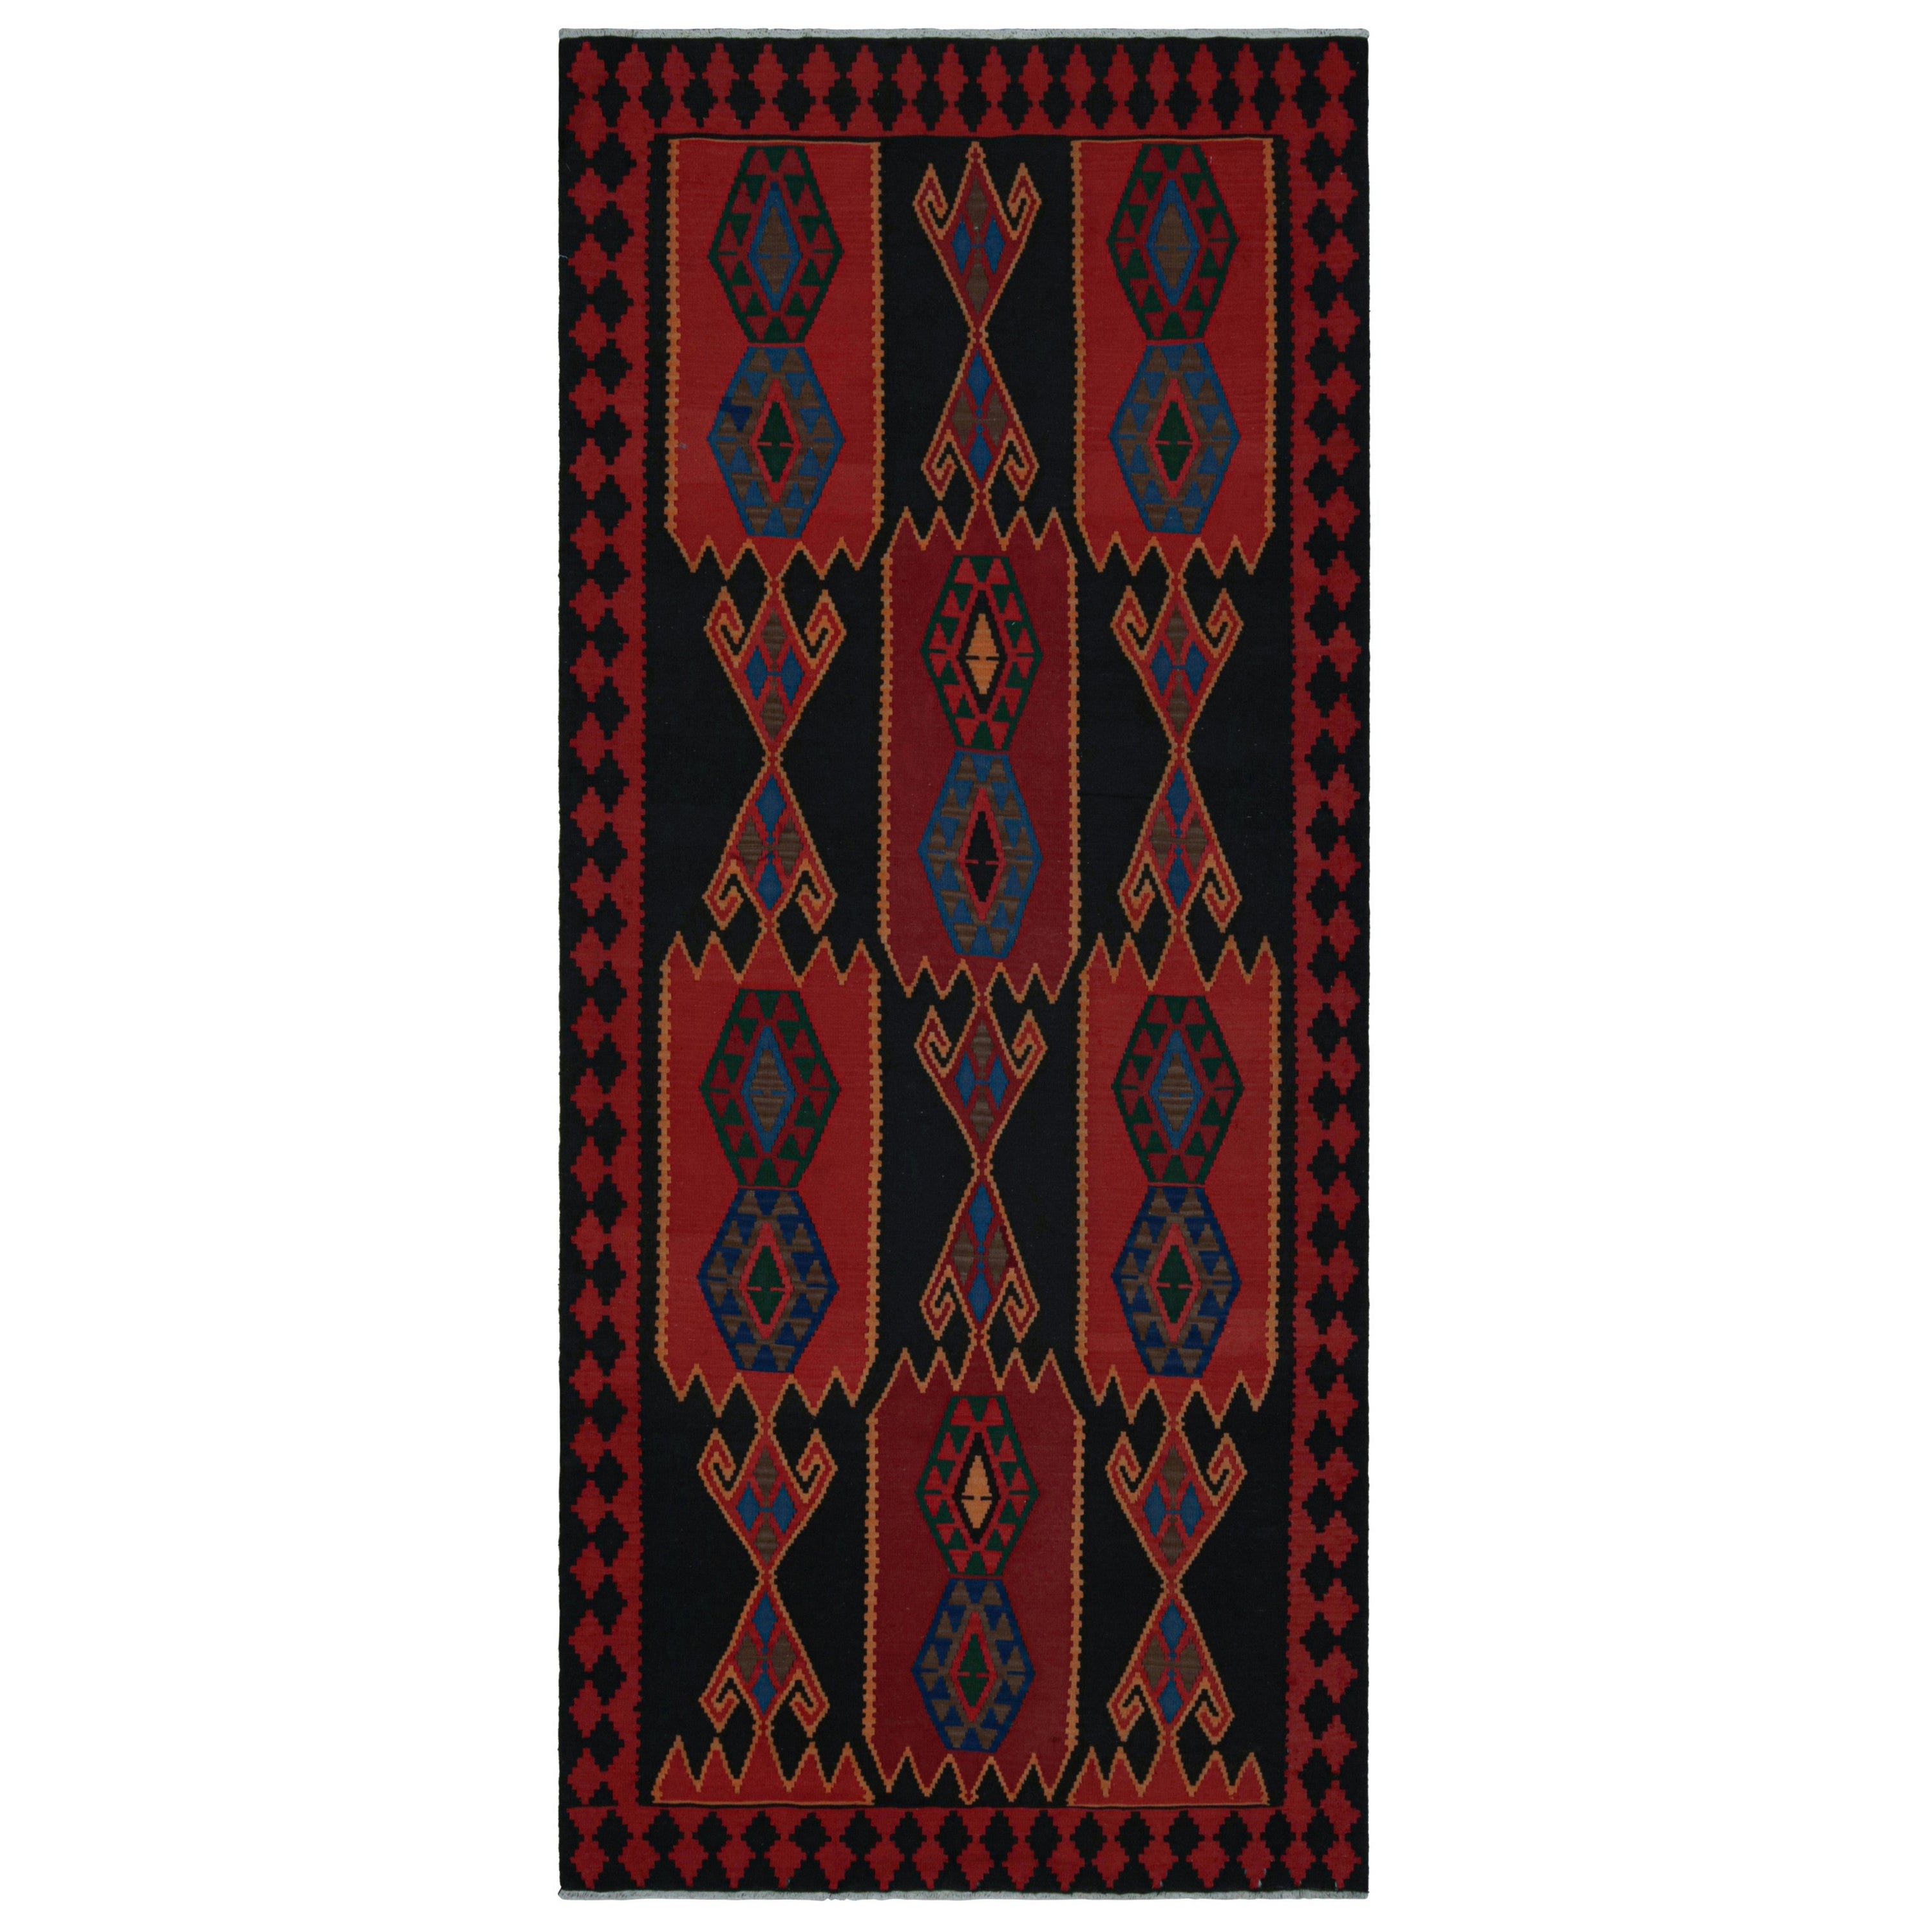 Vintage Afghan Kilim Runner Rug, with Geometric Patterns, from Rug & Kilim For Sale